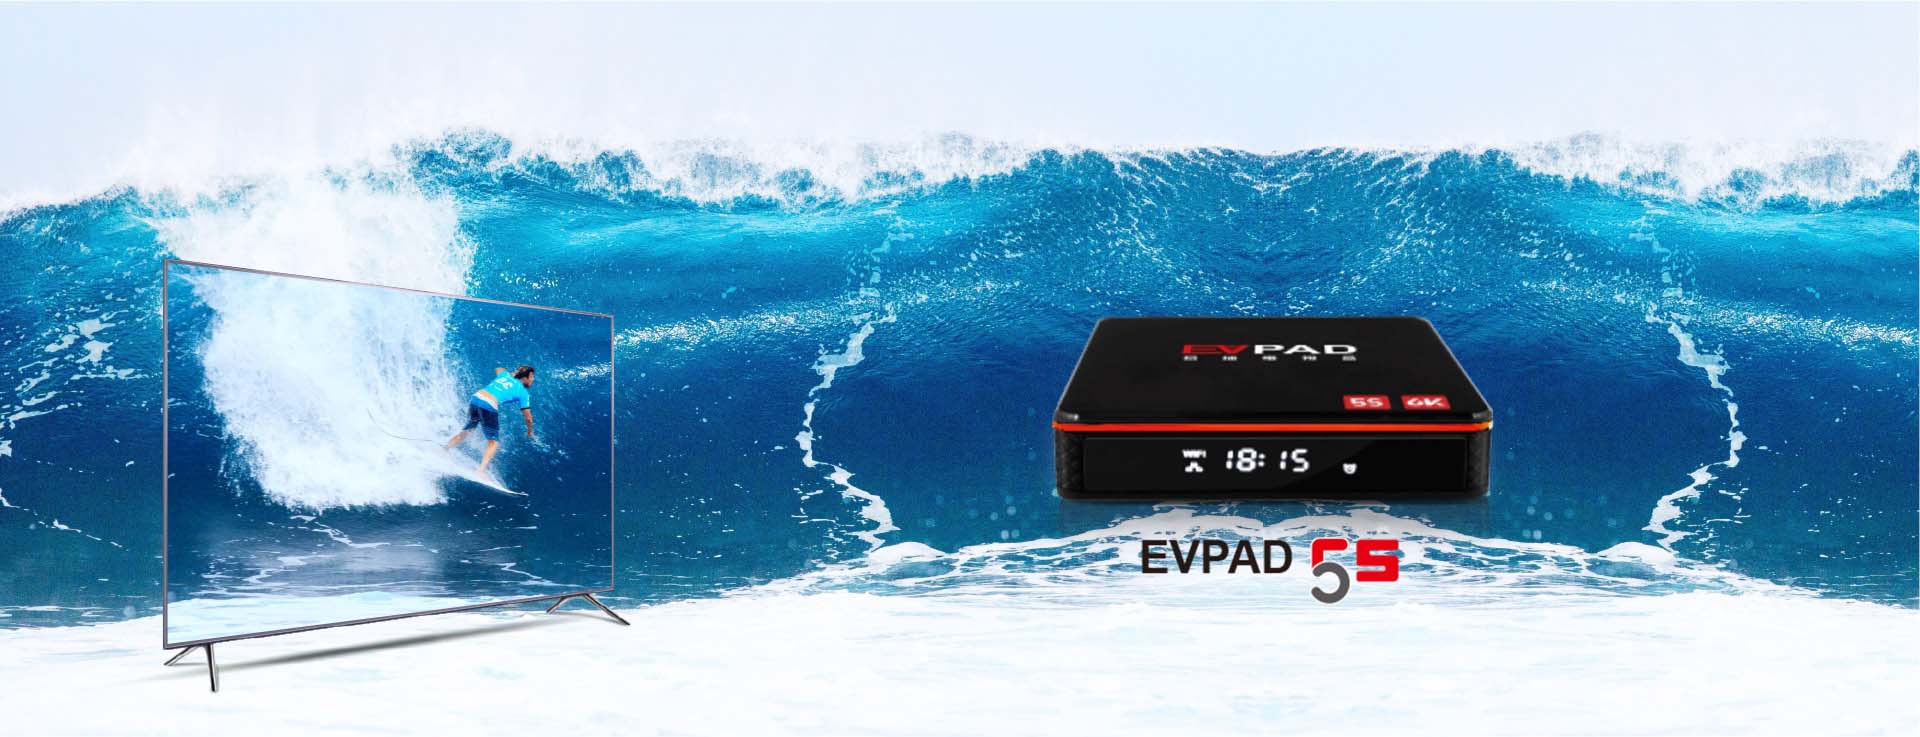 EVPAD 5S - THE WORLD'S 1ST VOICE-ACTIVATED AI TV BOX